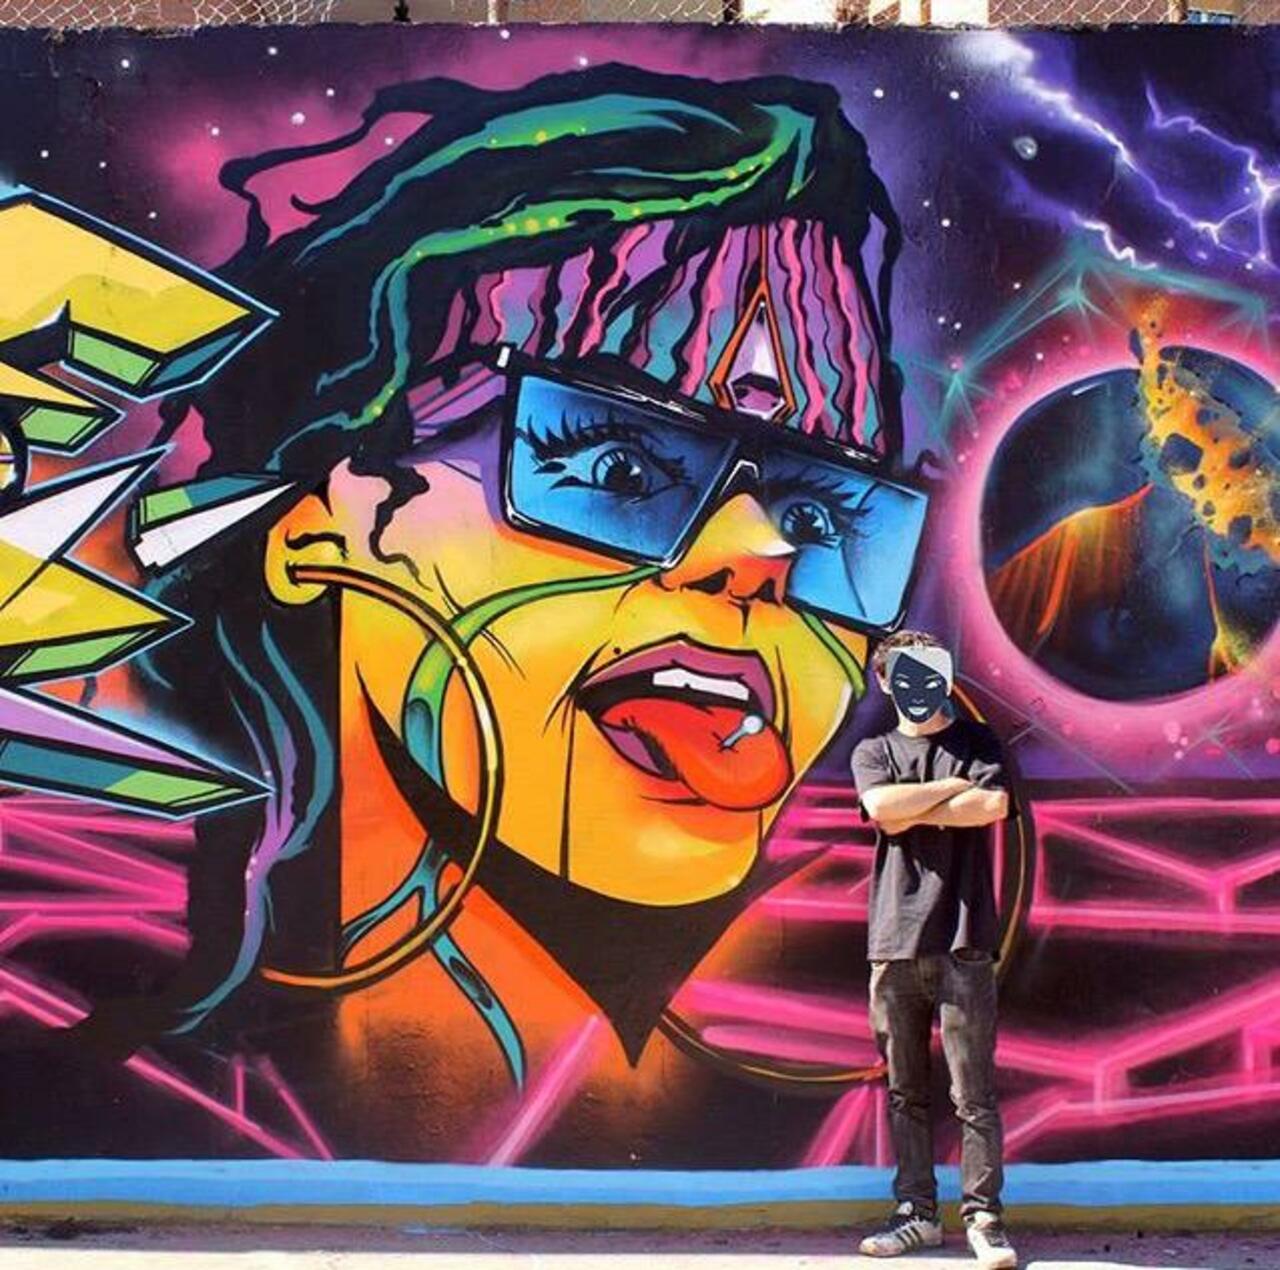 Brilliant new Street Art by the artist Jaycaes

#art #graffiti #mural #streetart http://t.co/i723TIn7ST